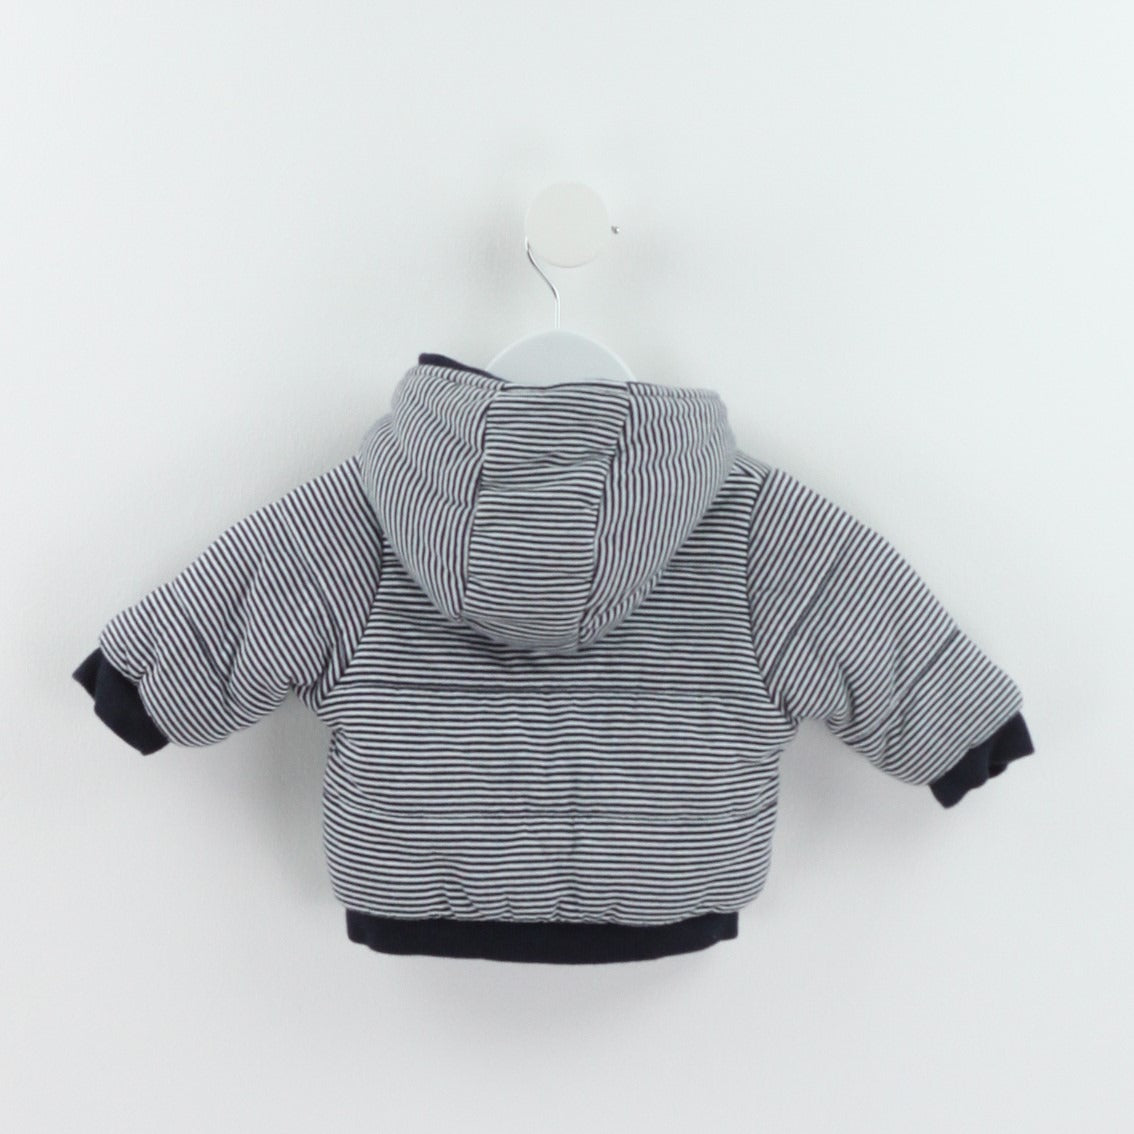 Pre-loved Baby Jacket (3M)